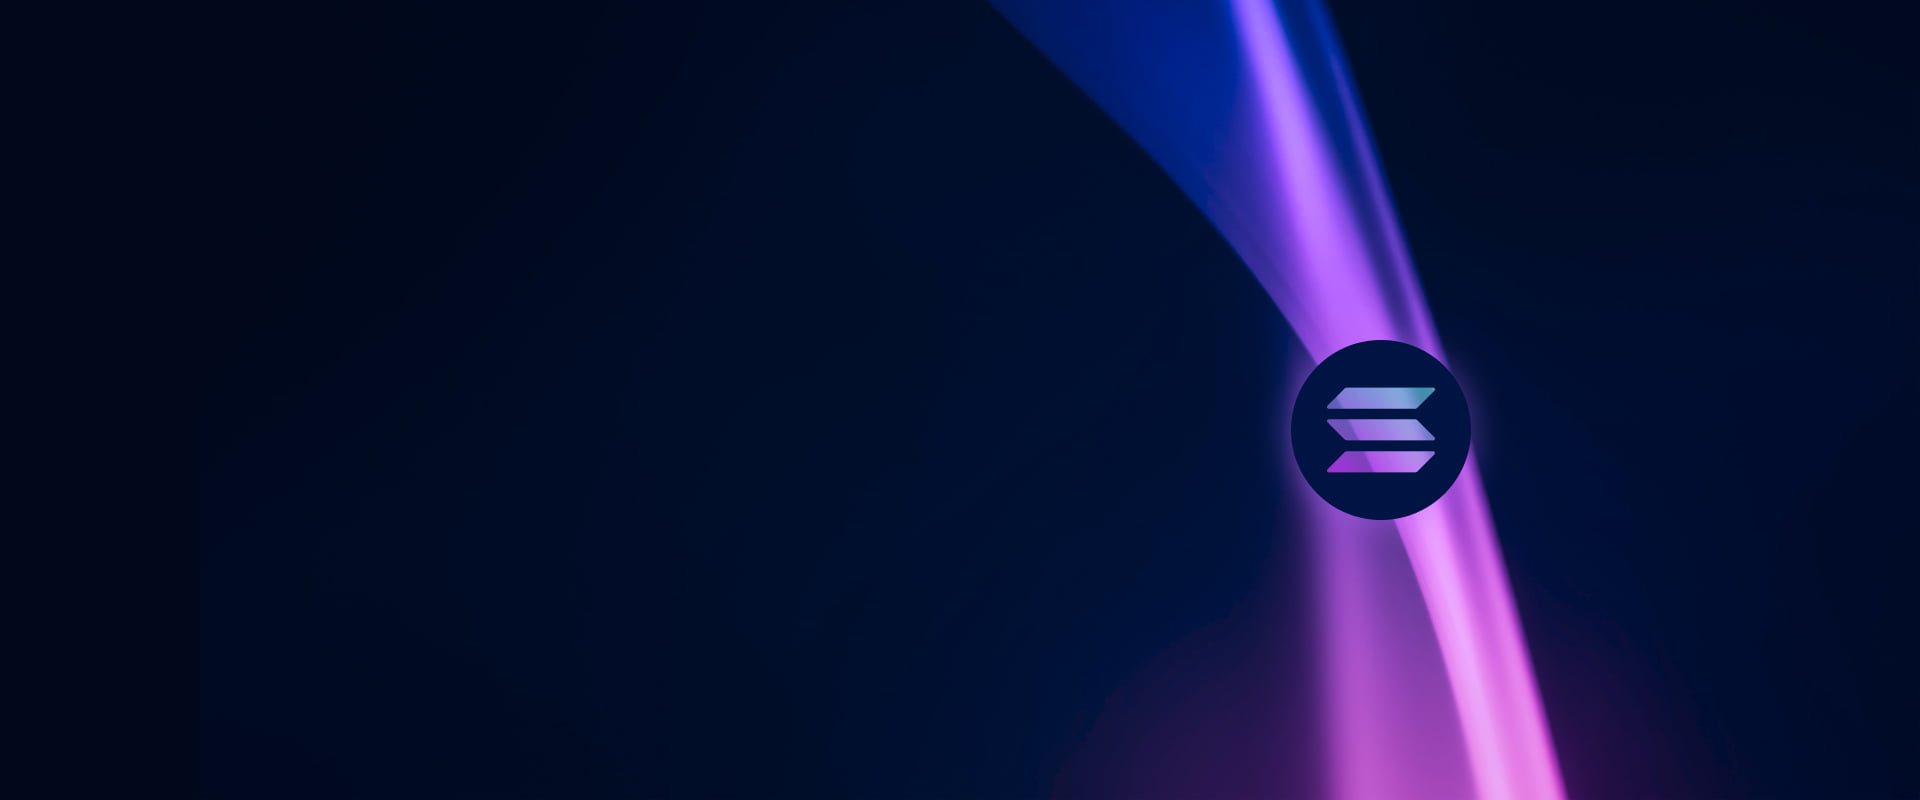 Solana logo on a purple background